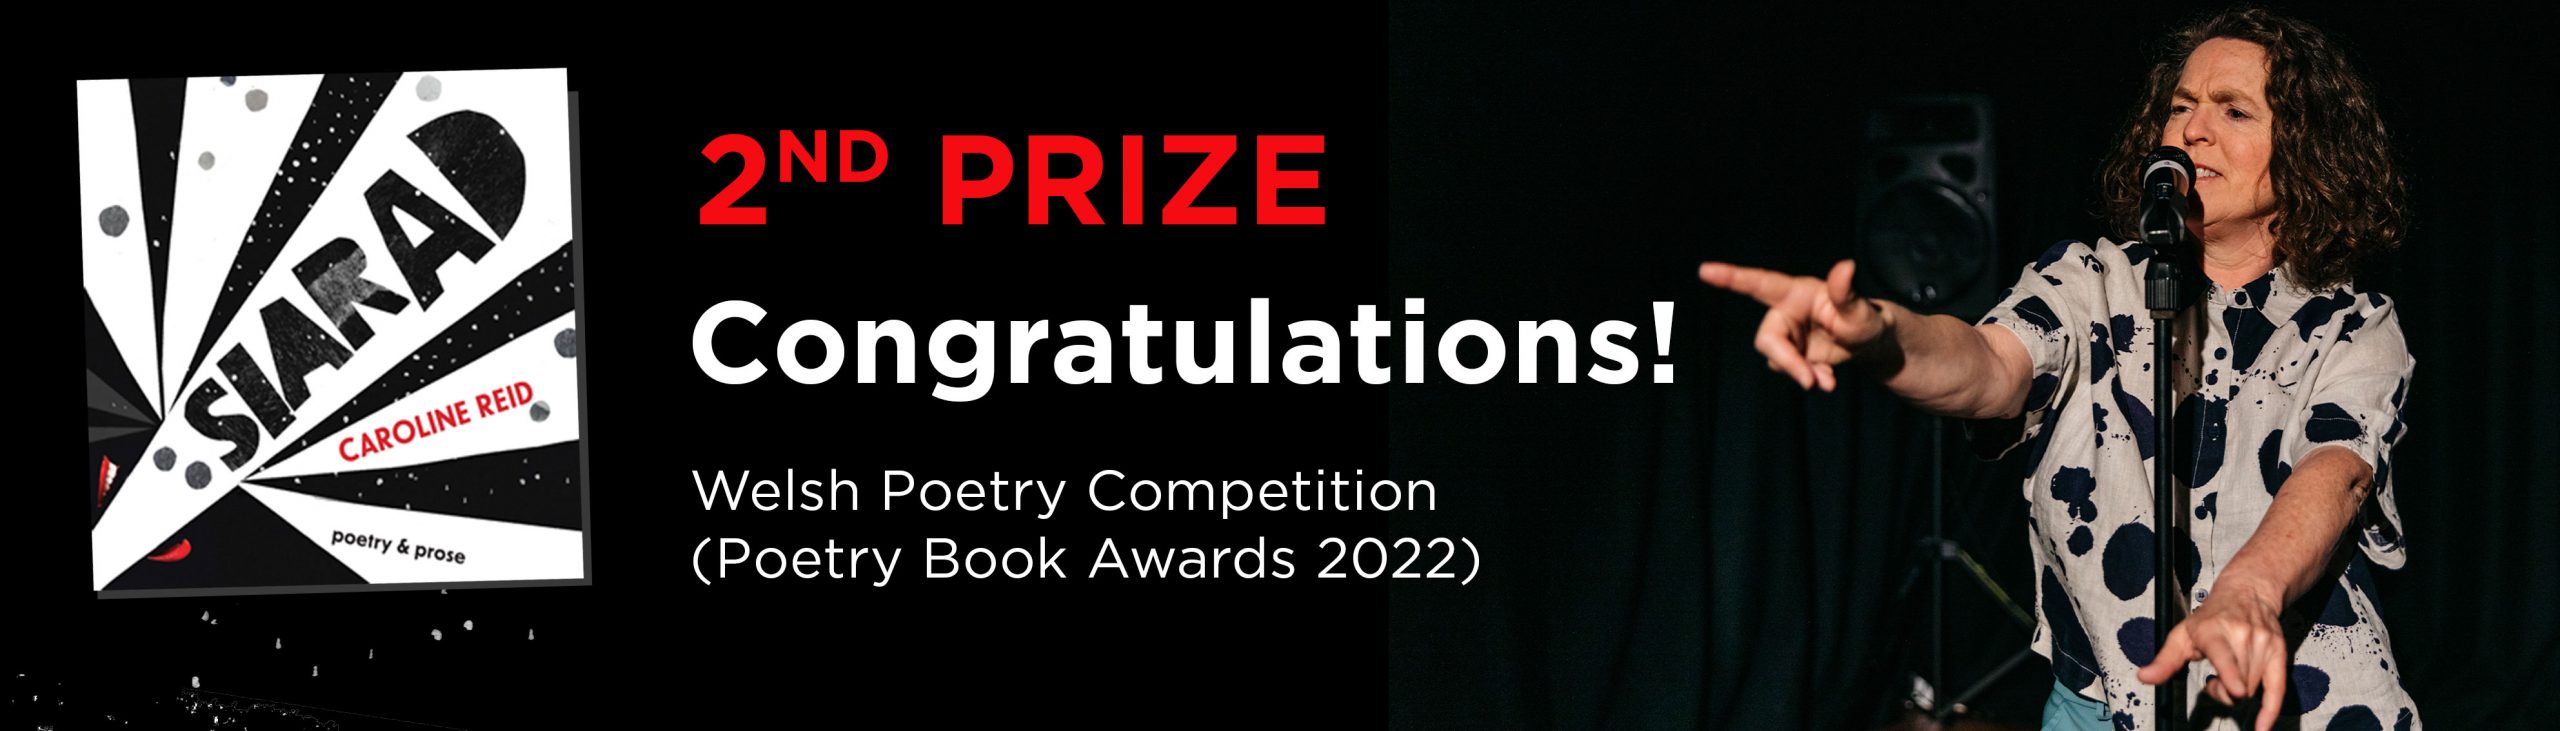 Congratulations Caroline Reid Poetry Book Awards, 2nd Prize winner